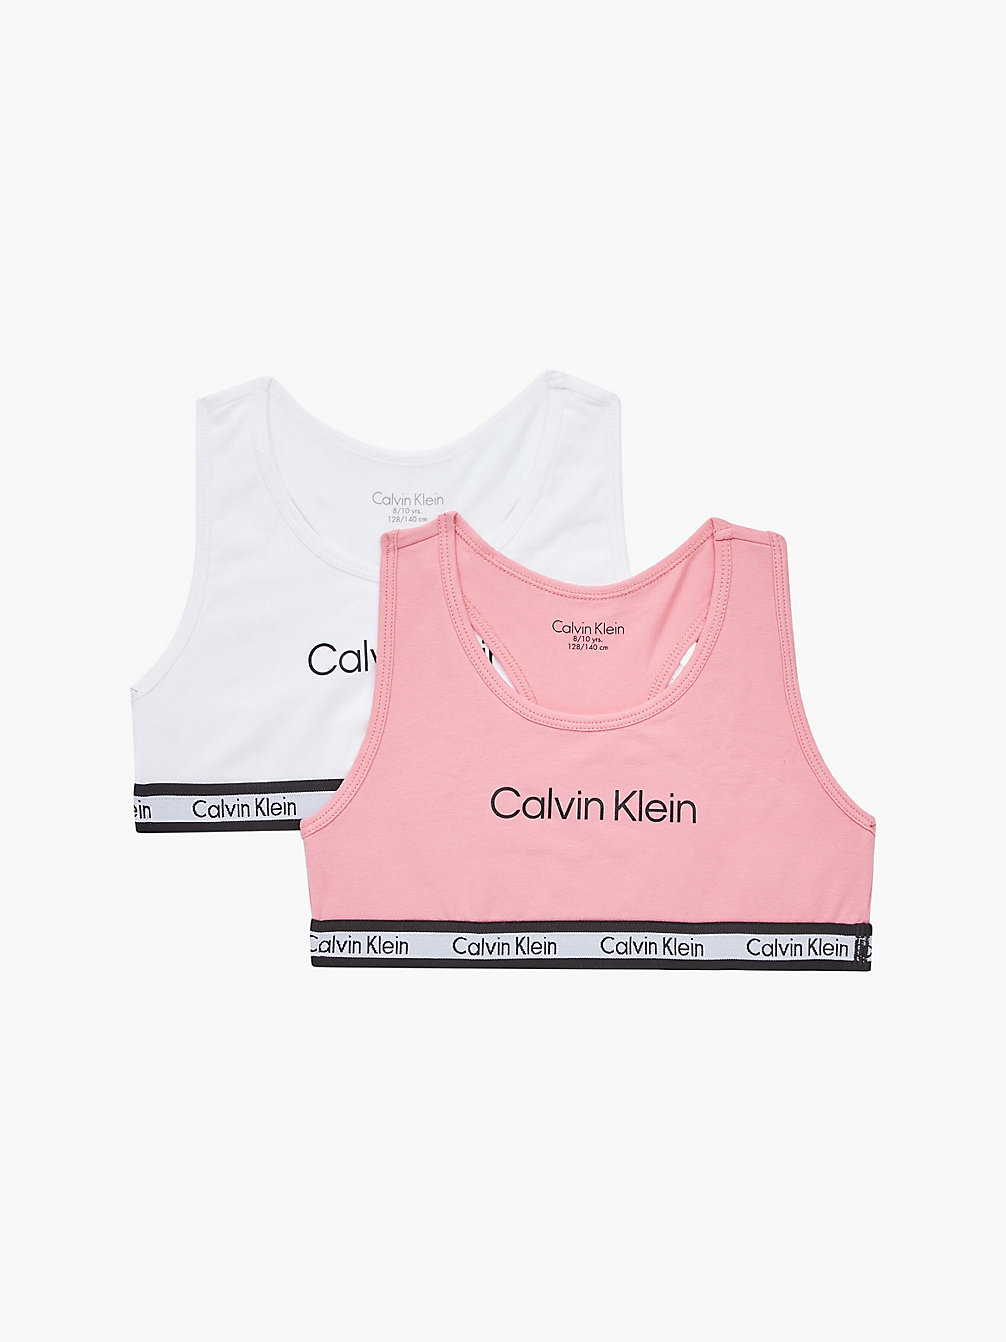 ROSEYPINK/PVHWHITE 2 Pack Girls Bralettes - Modern Cotton undefined girls Calvin Klein